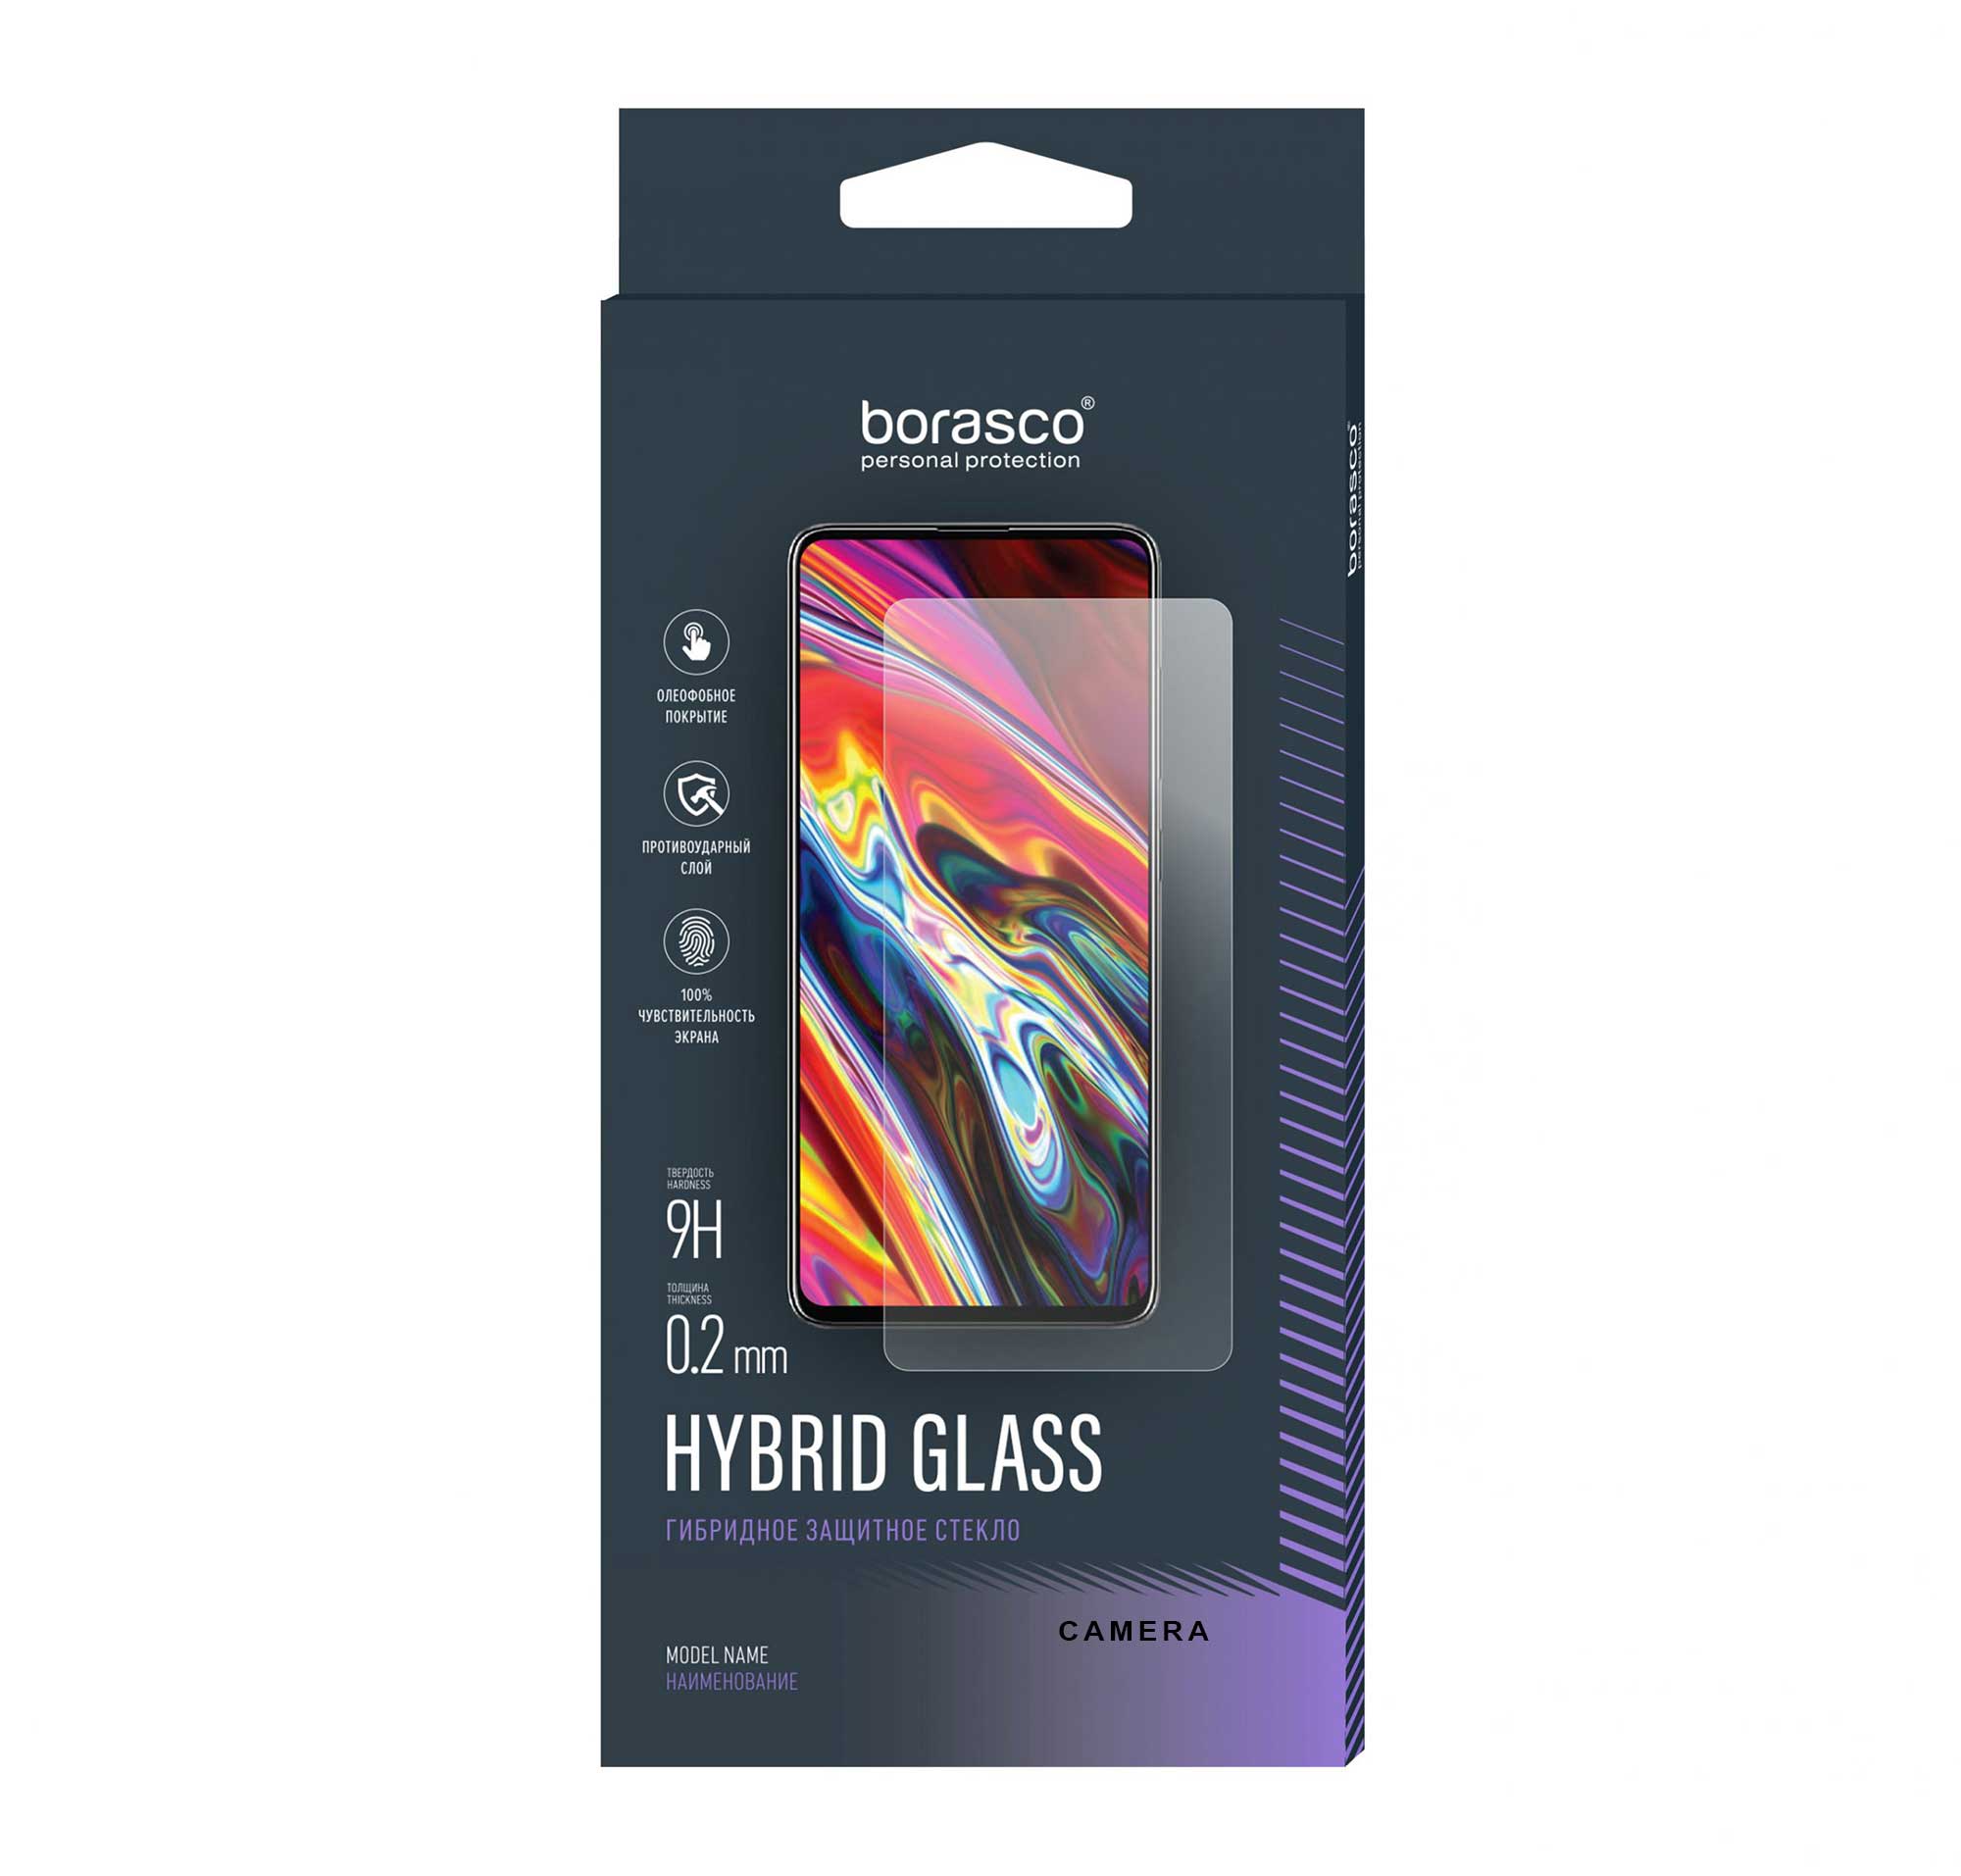 Защитное стекло (Экран+Камера) BoraSCO Hybrid Glass для ITEL Vision 1 Pro защитное стекло borasco 0 26 mm для itel vision 3